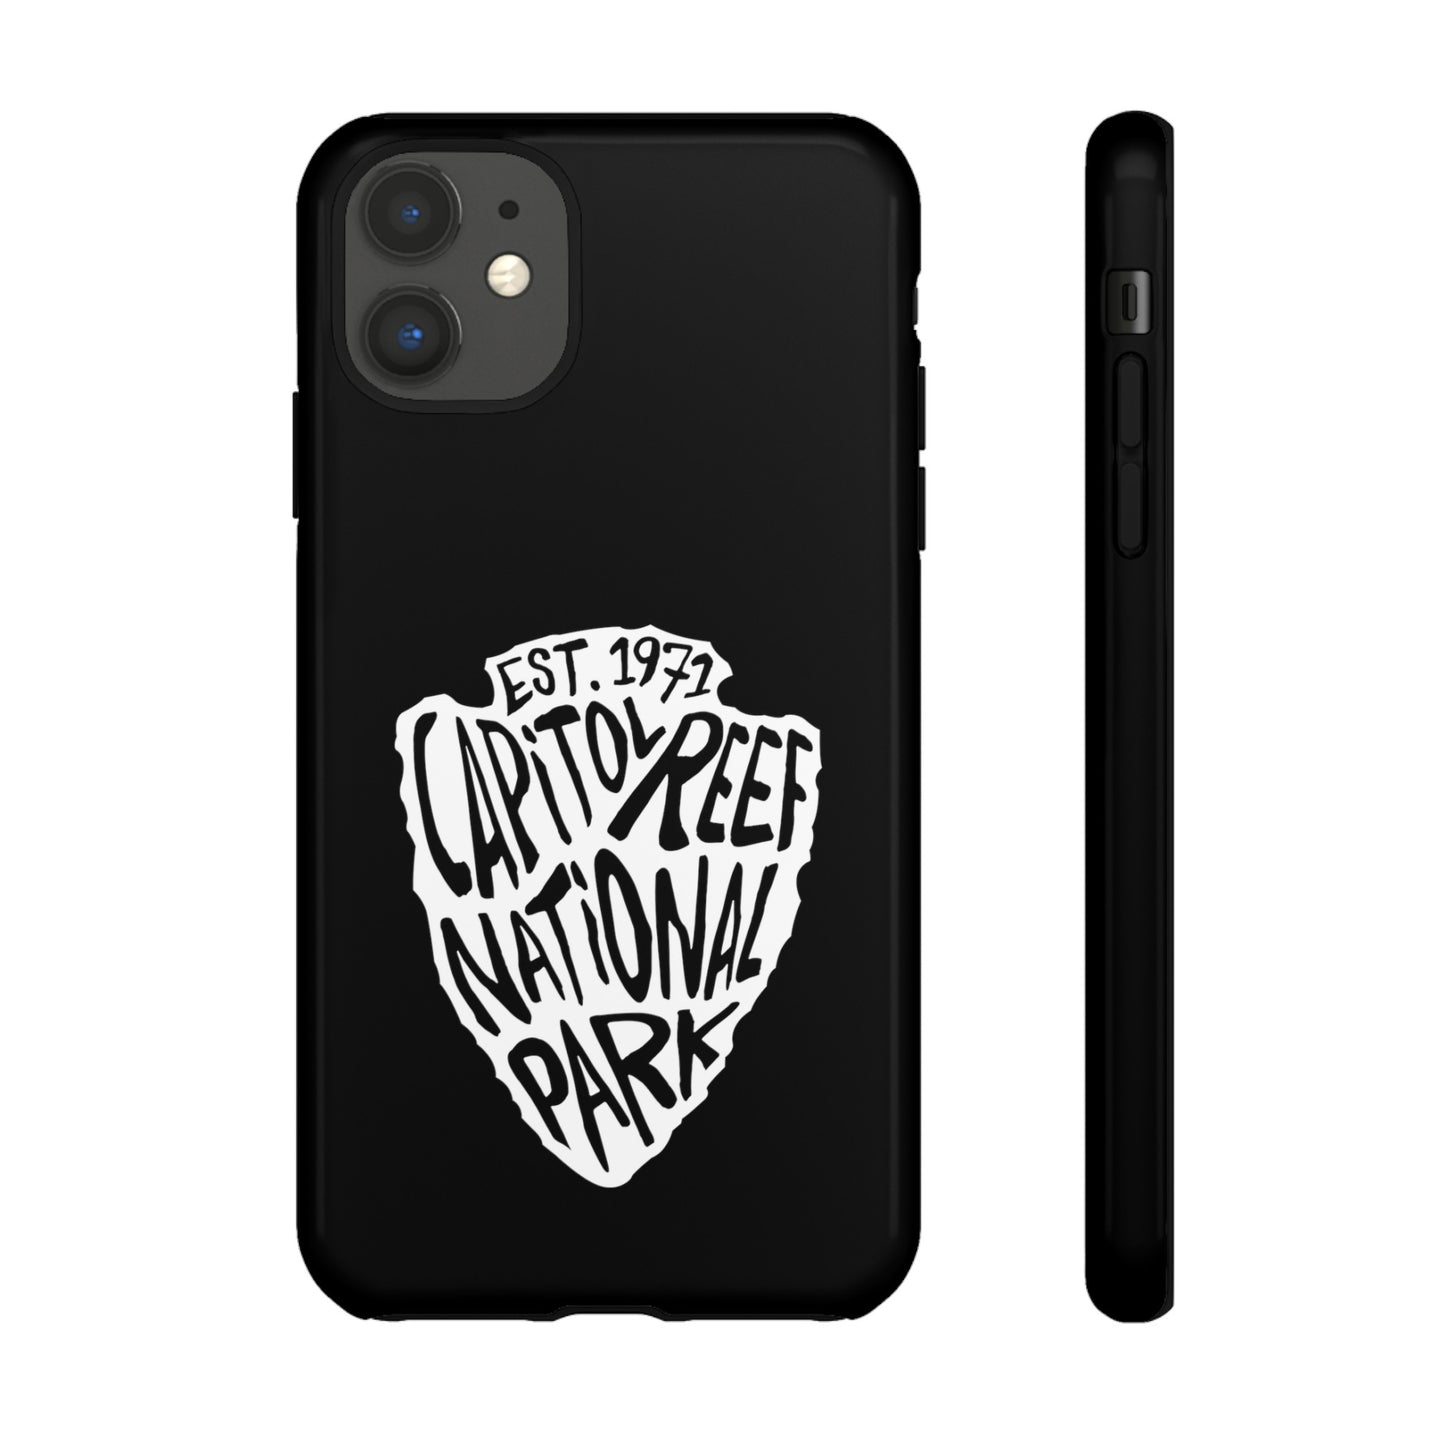 Capitol Reef National Park Phone Case - Arrowhead Design